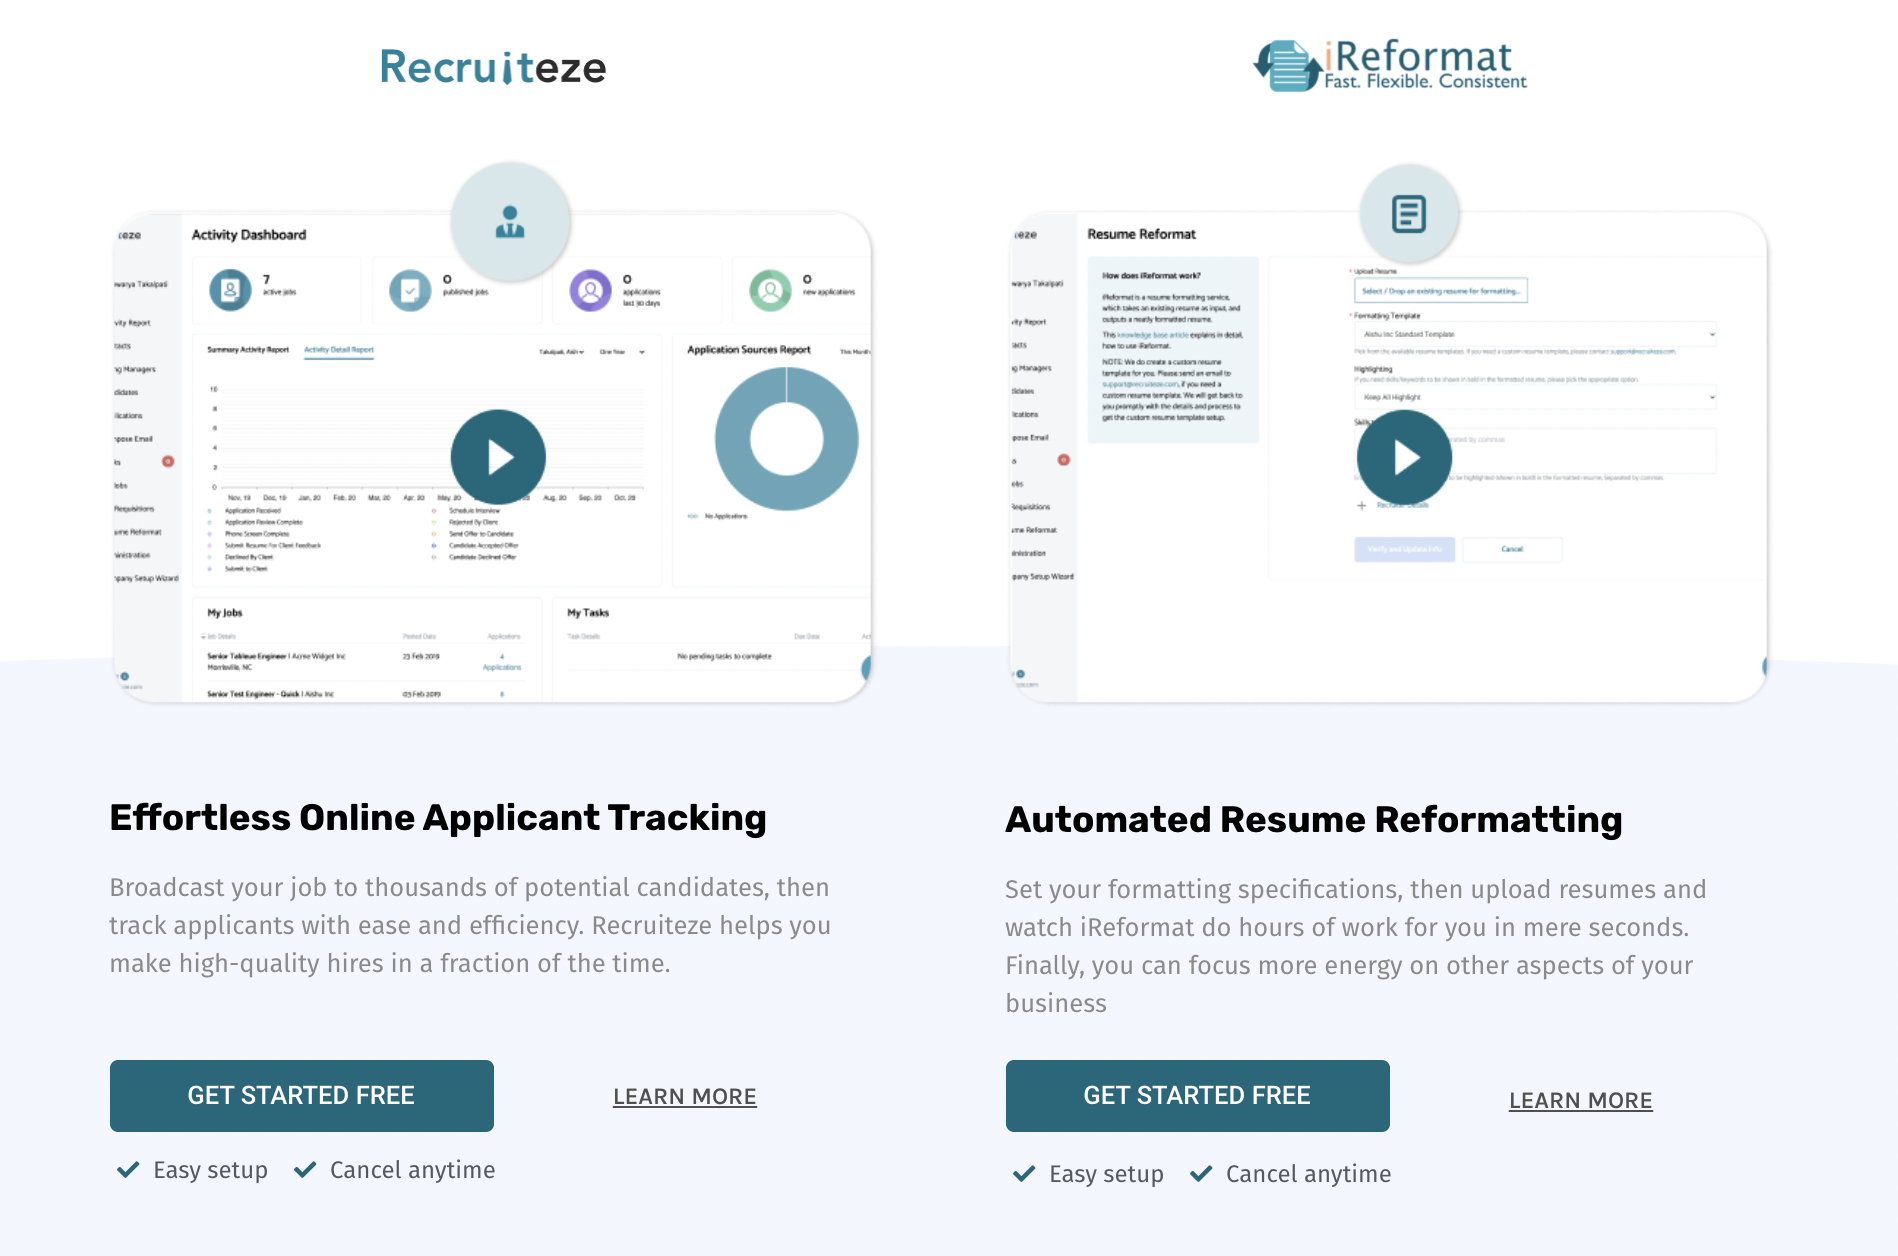 Recruiteze and iReformat